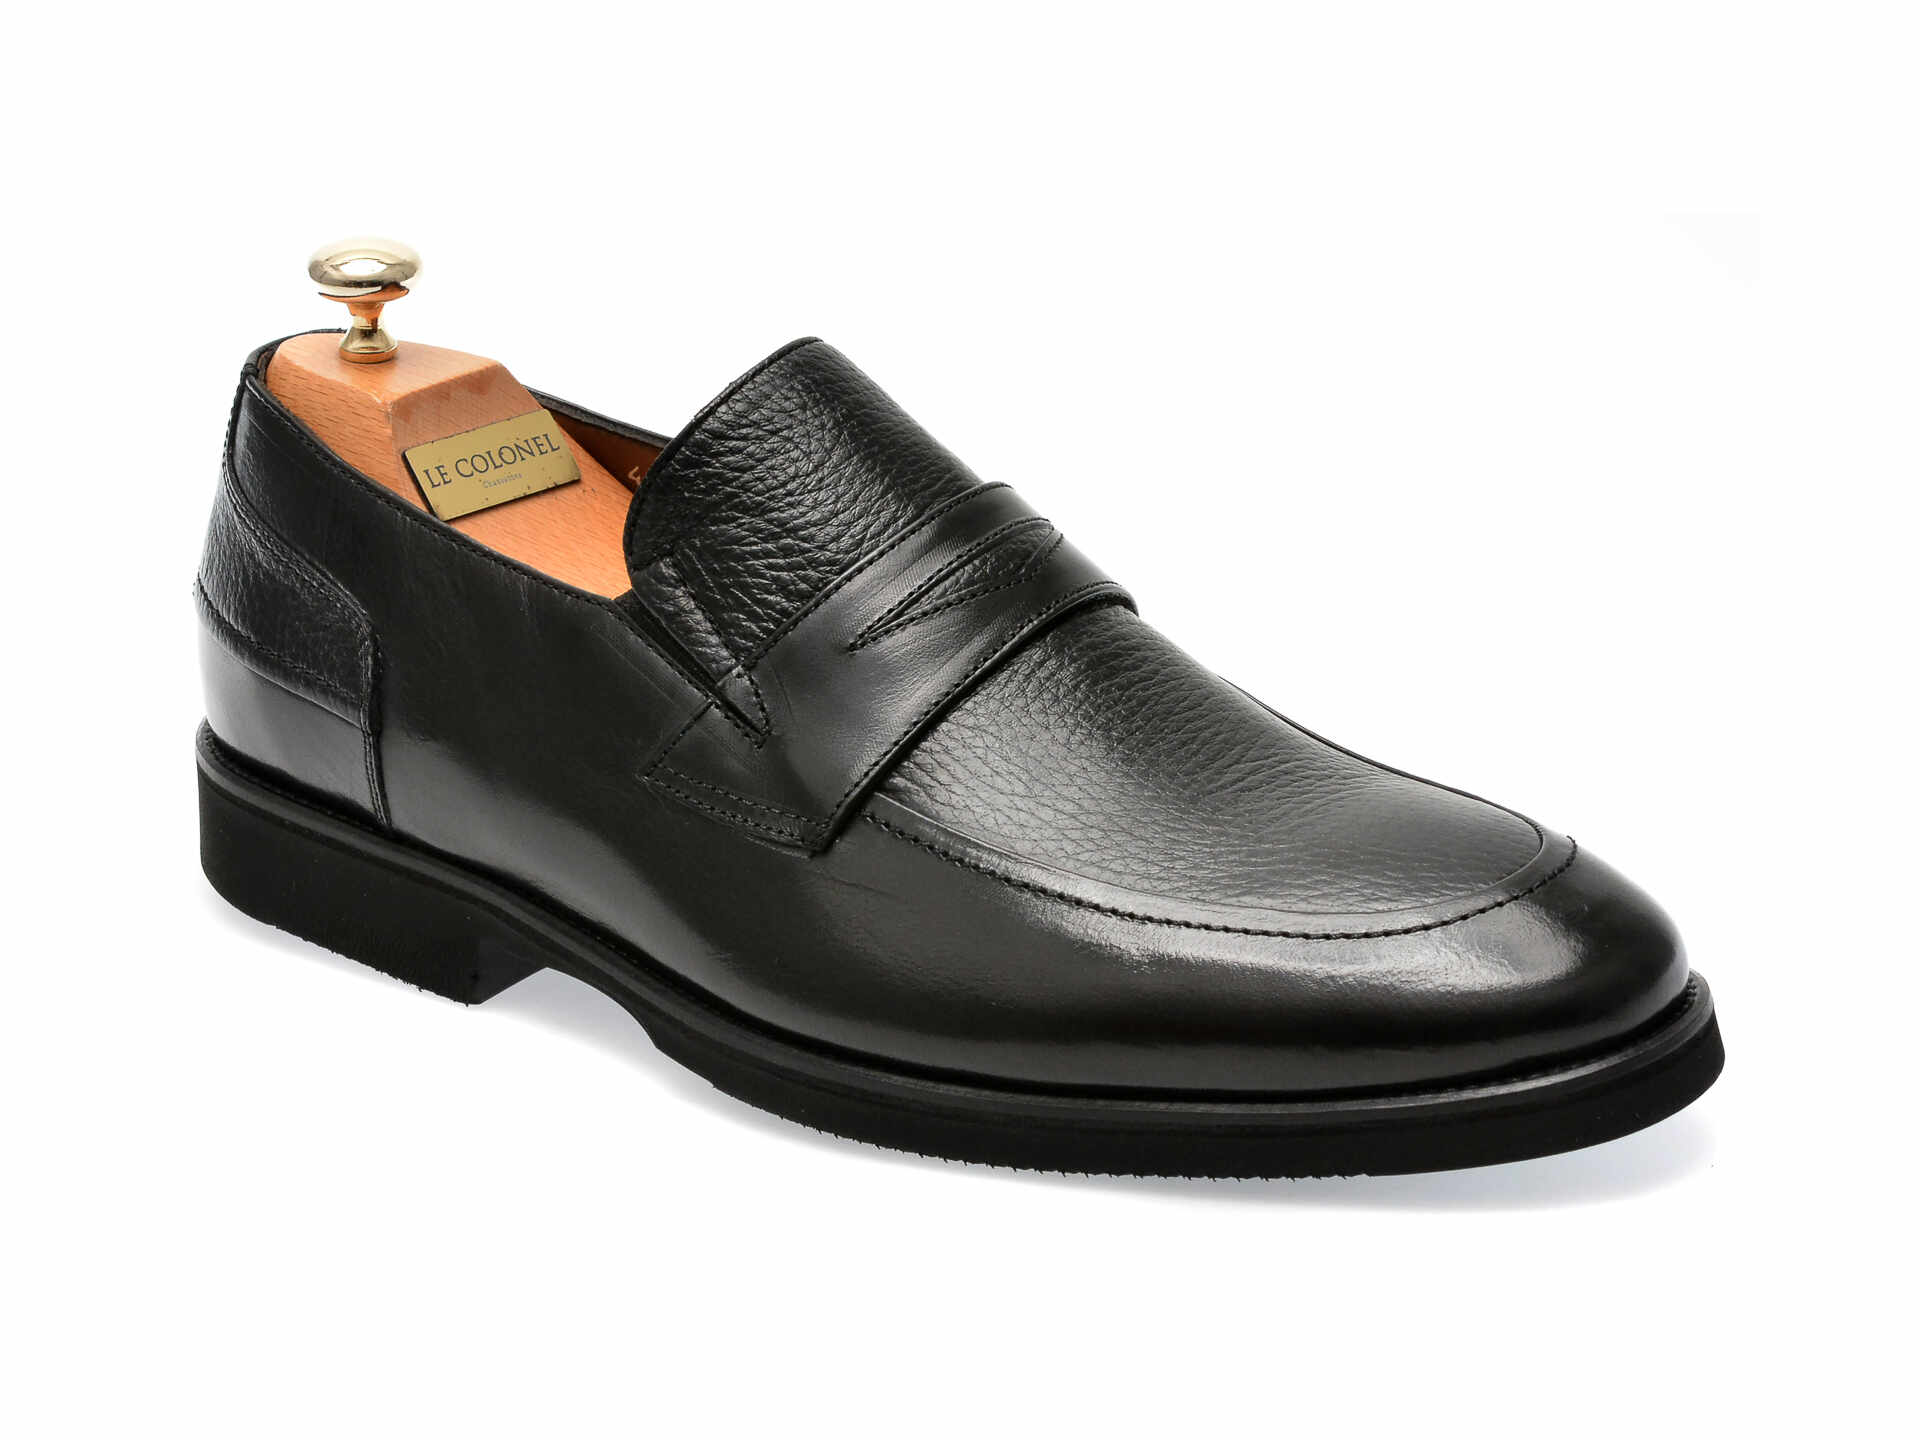 Pantofi LE COLONEL negri, 422104, din piele naturala